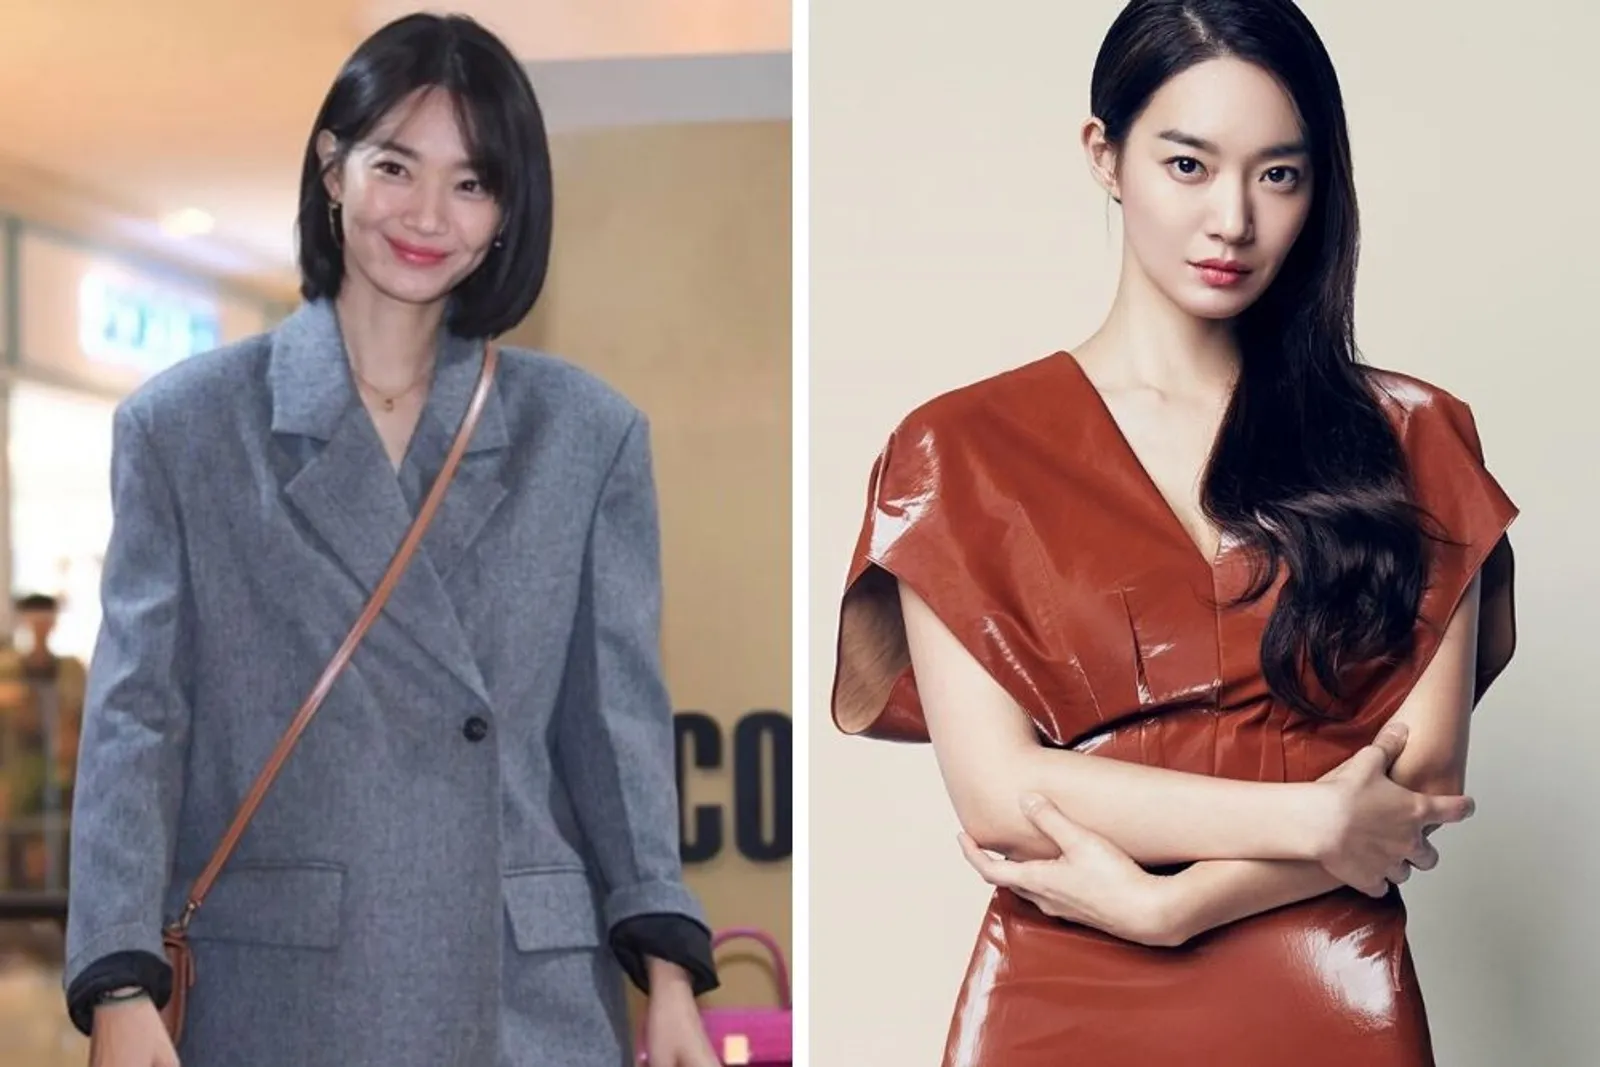 Gaya Seleb Korea dengan Rambut Pendek vs Panjang, Siapa Favoritmu?